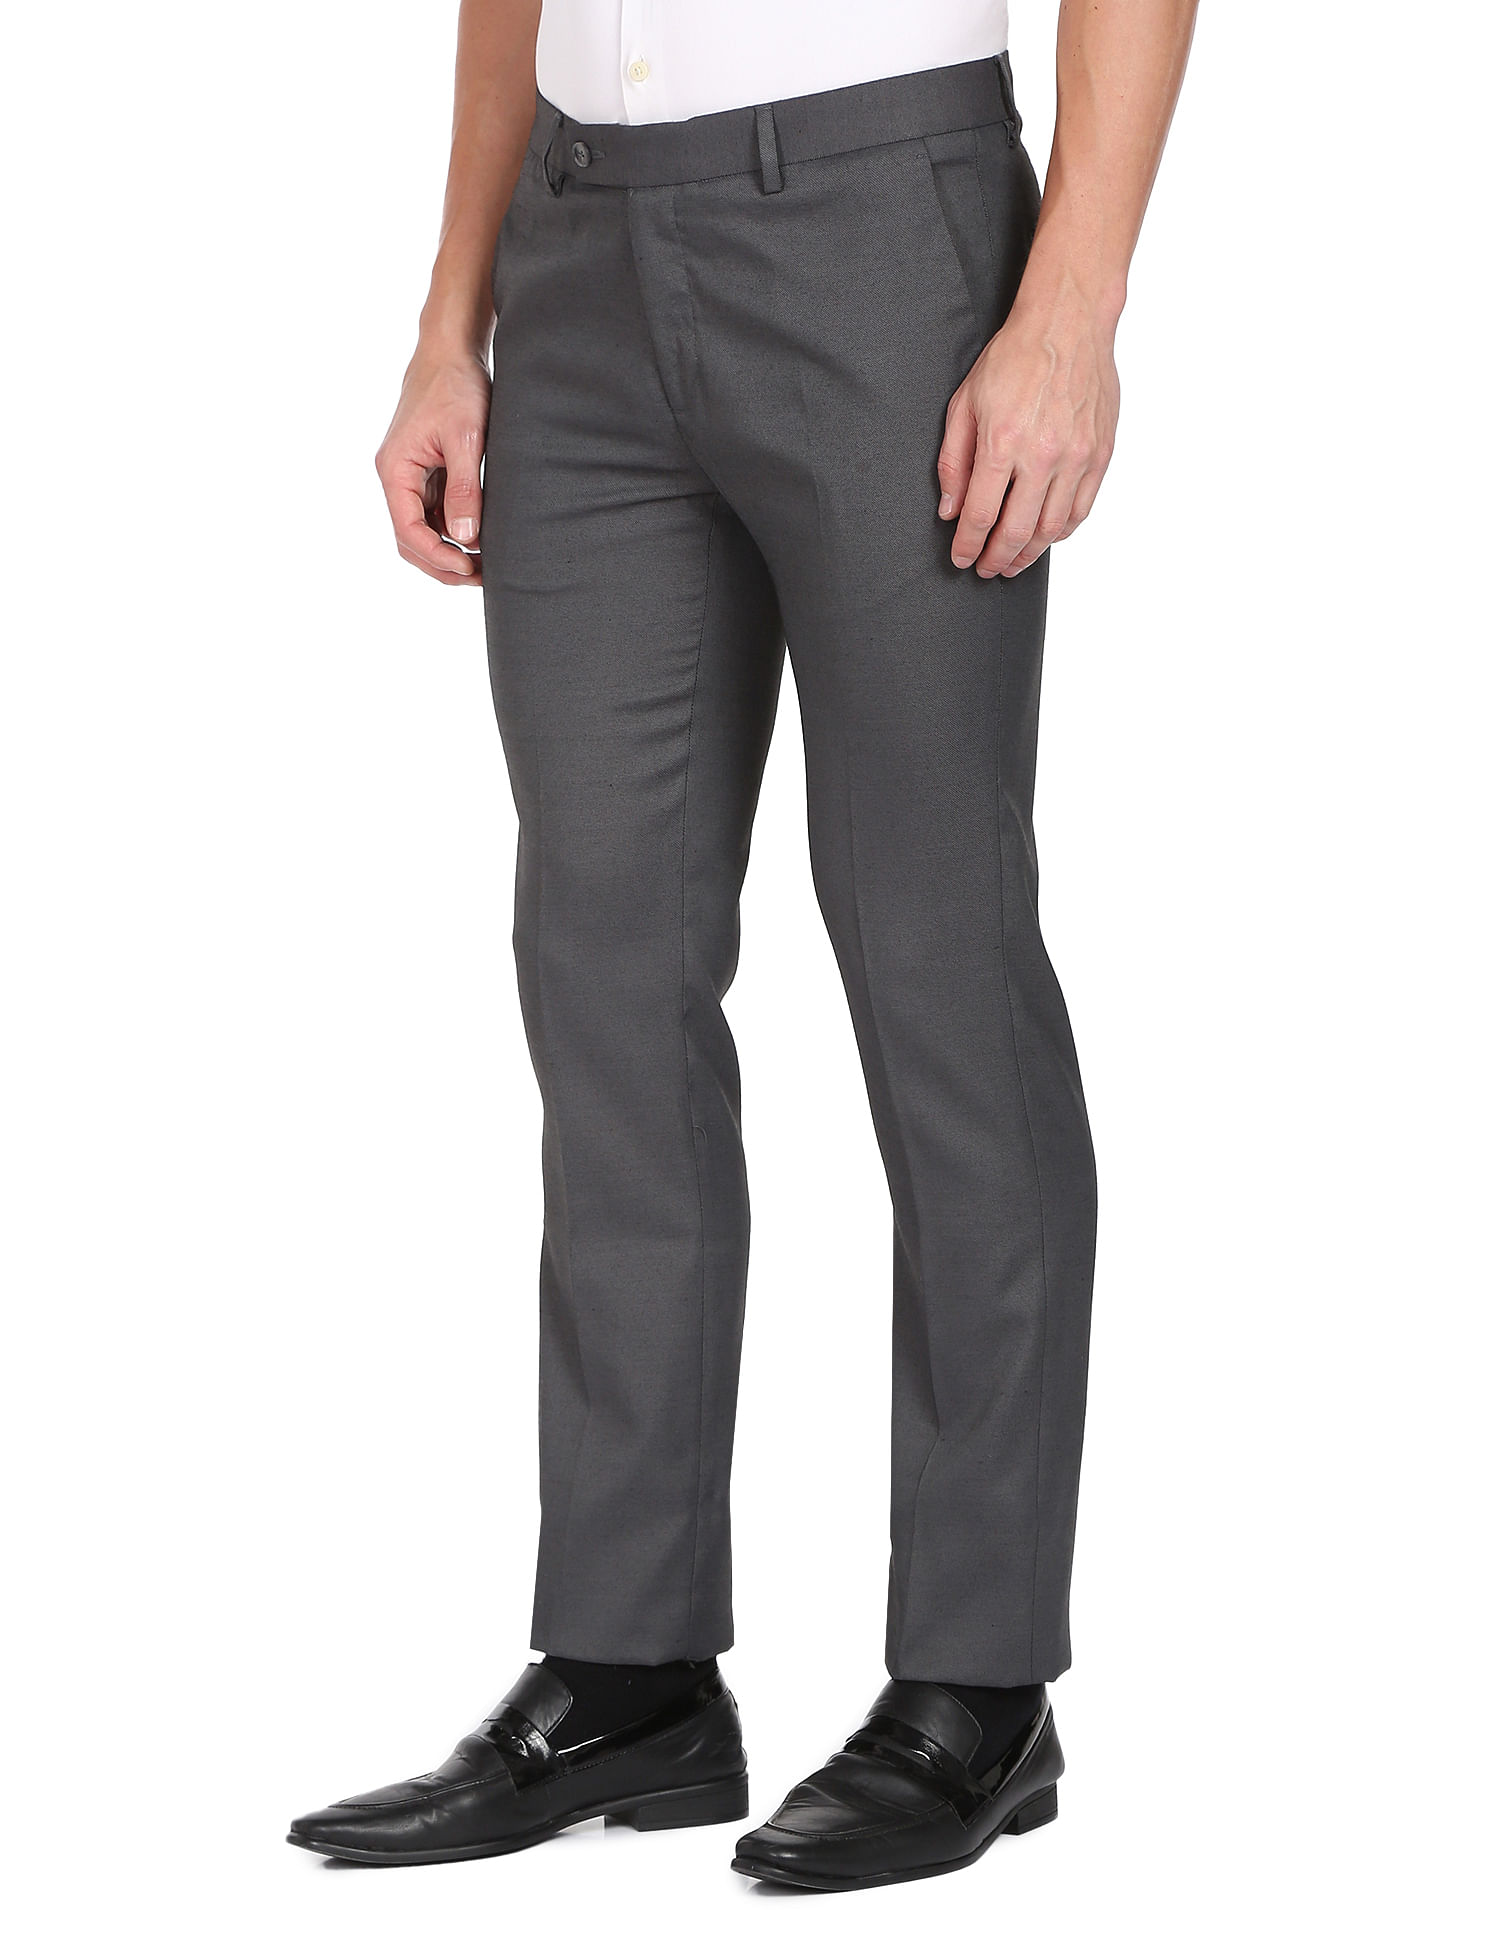 Formal Pants for Men  Mens Slim fit Formal Pant  Office wear Trousers  Dark  Grey